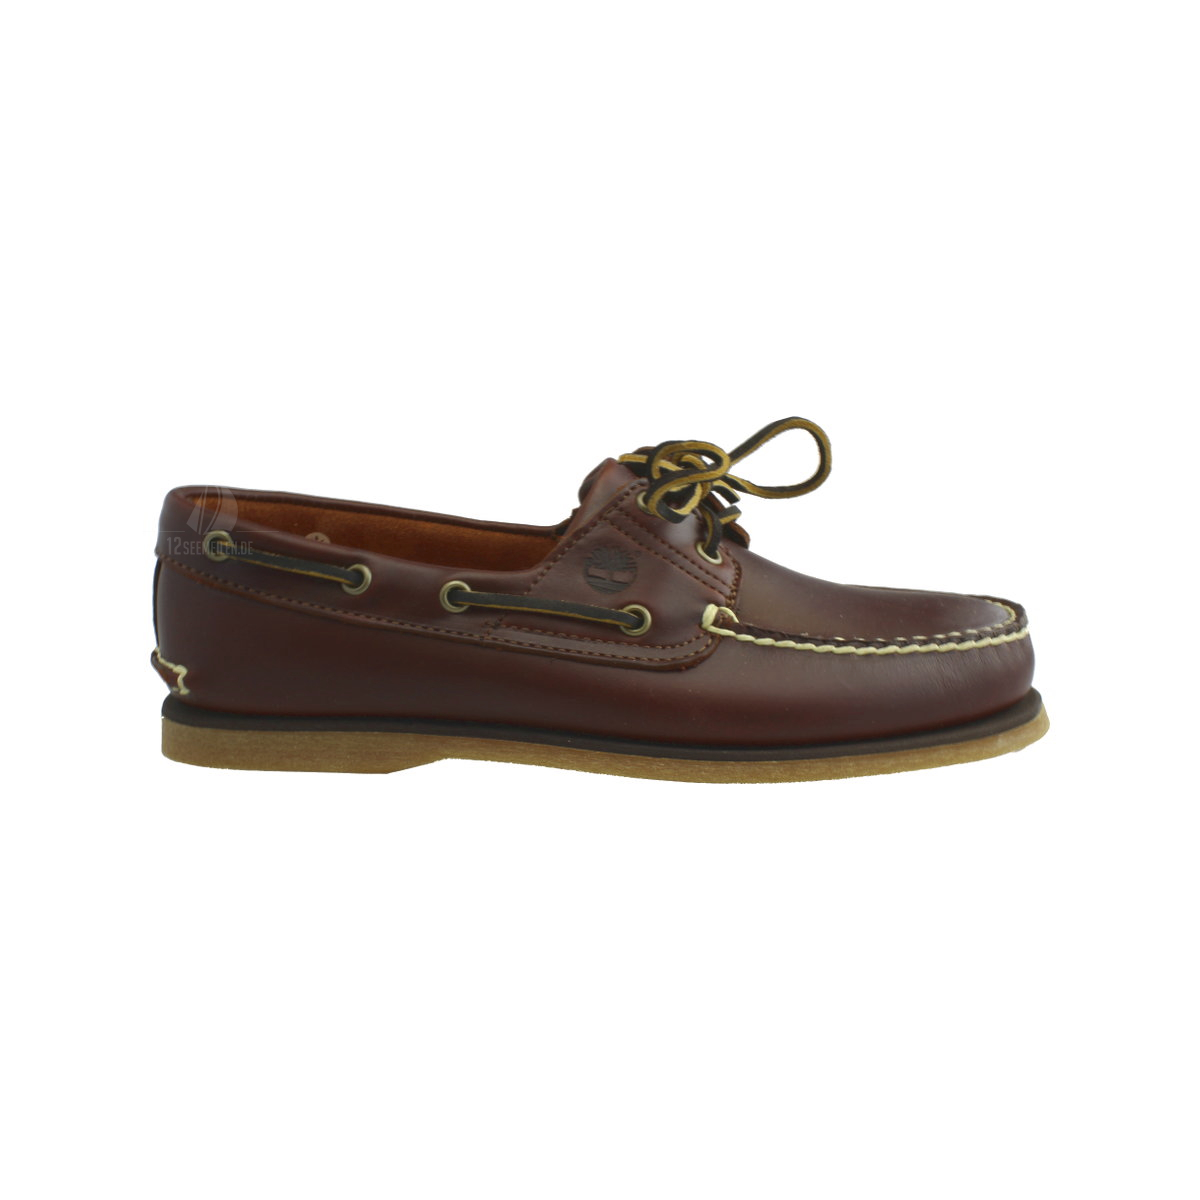 Timberland Classic Boat chaussures bateau Hommes brun - rouge eu 42 ( us 8,5 )